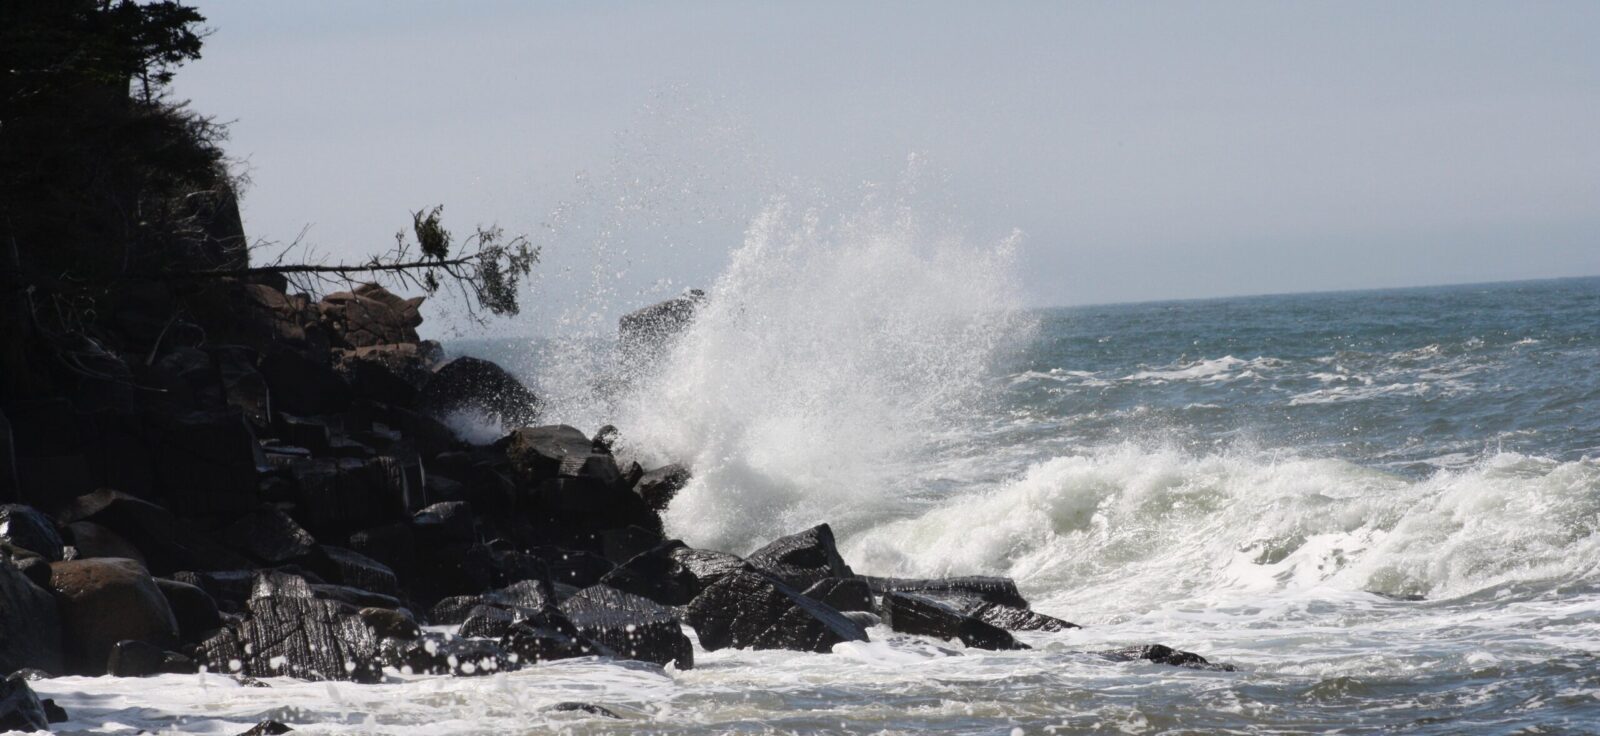 A large wave crashing into a rocky shore.